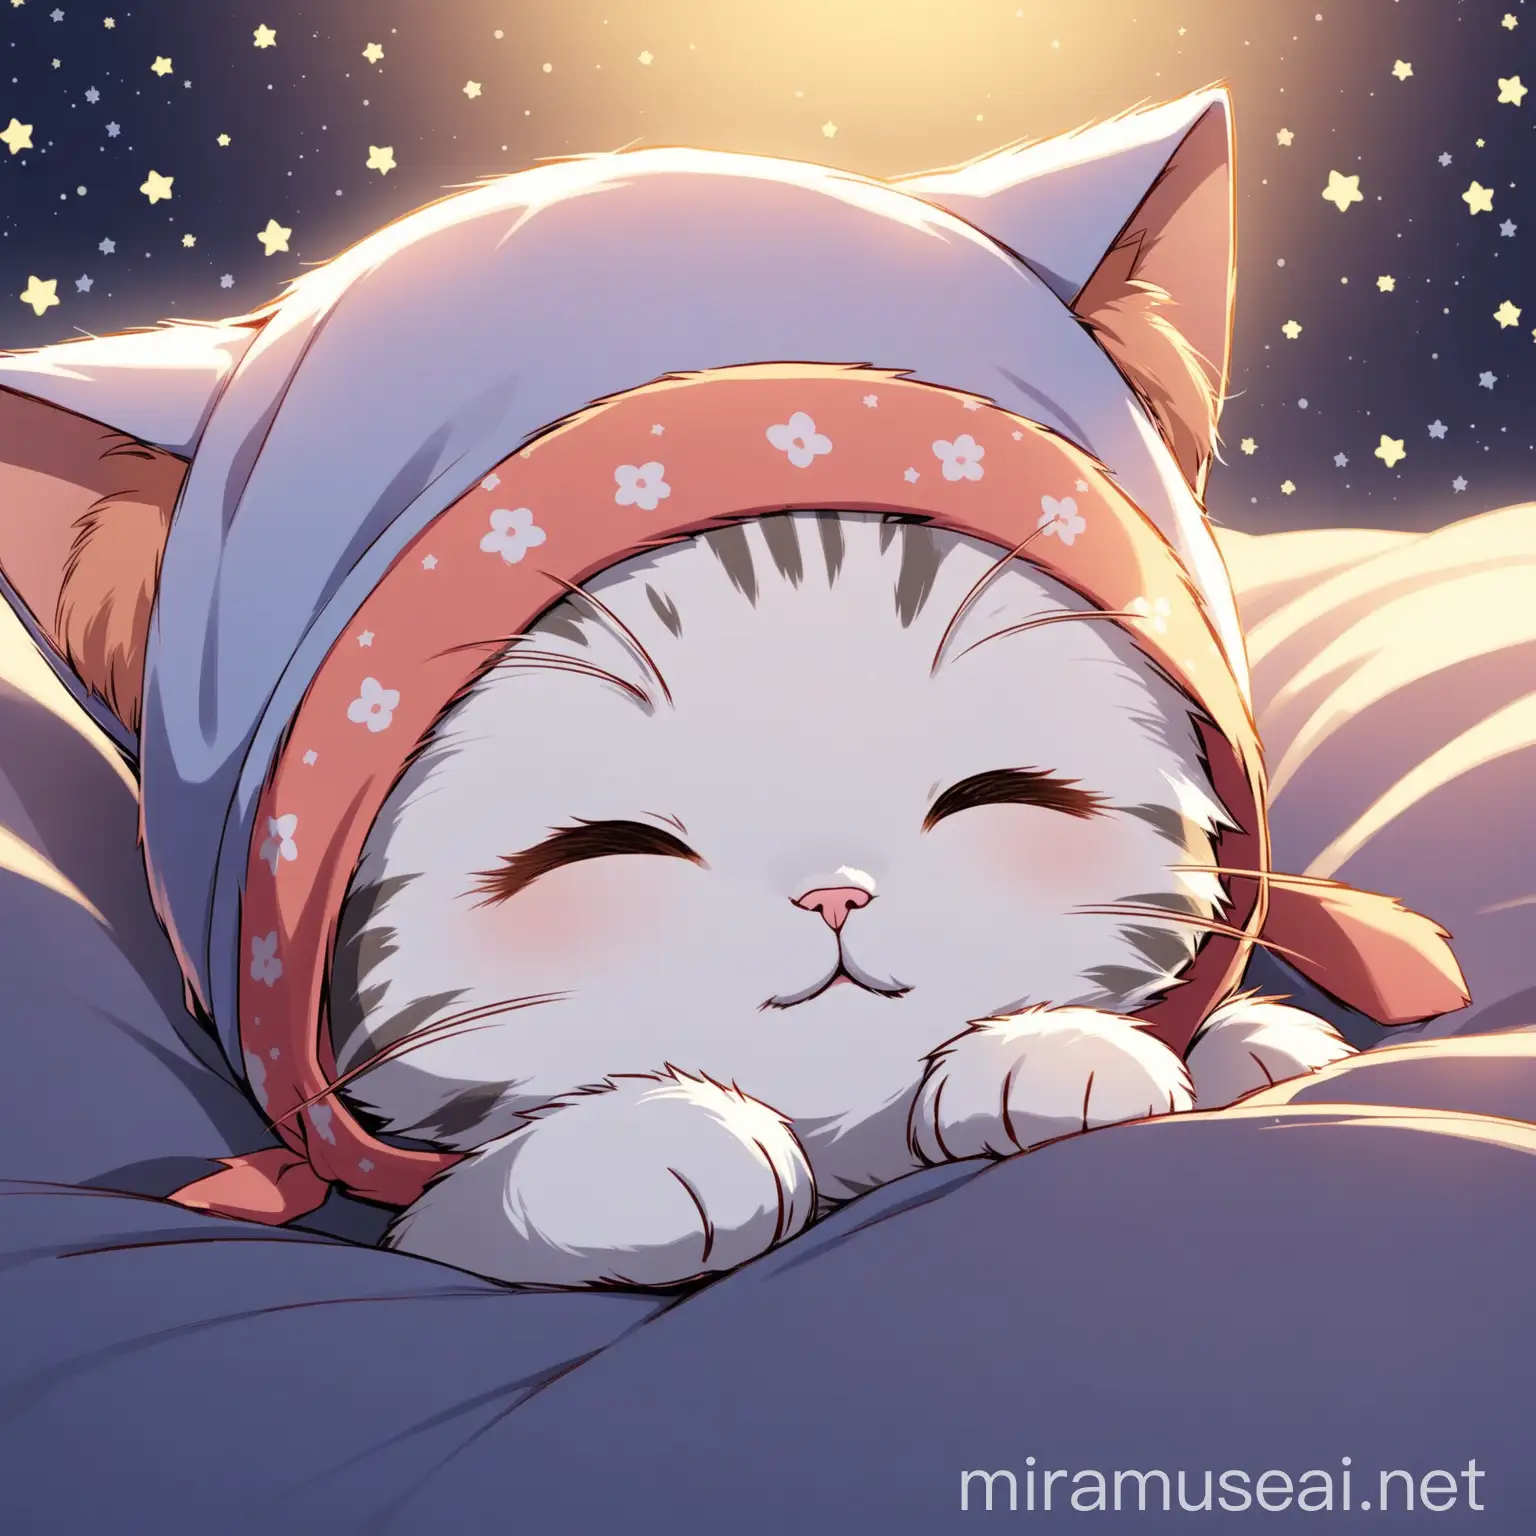 Adorable Kitty Sleeping Peacefully in a Cozy Sleeping Cap